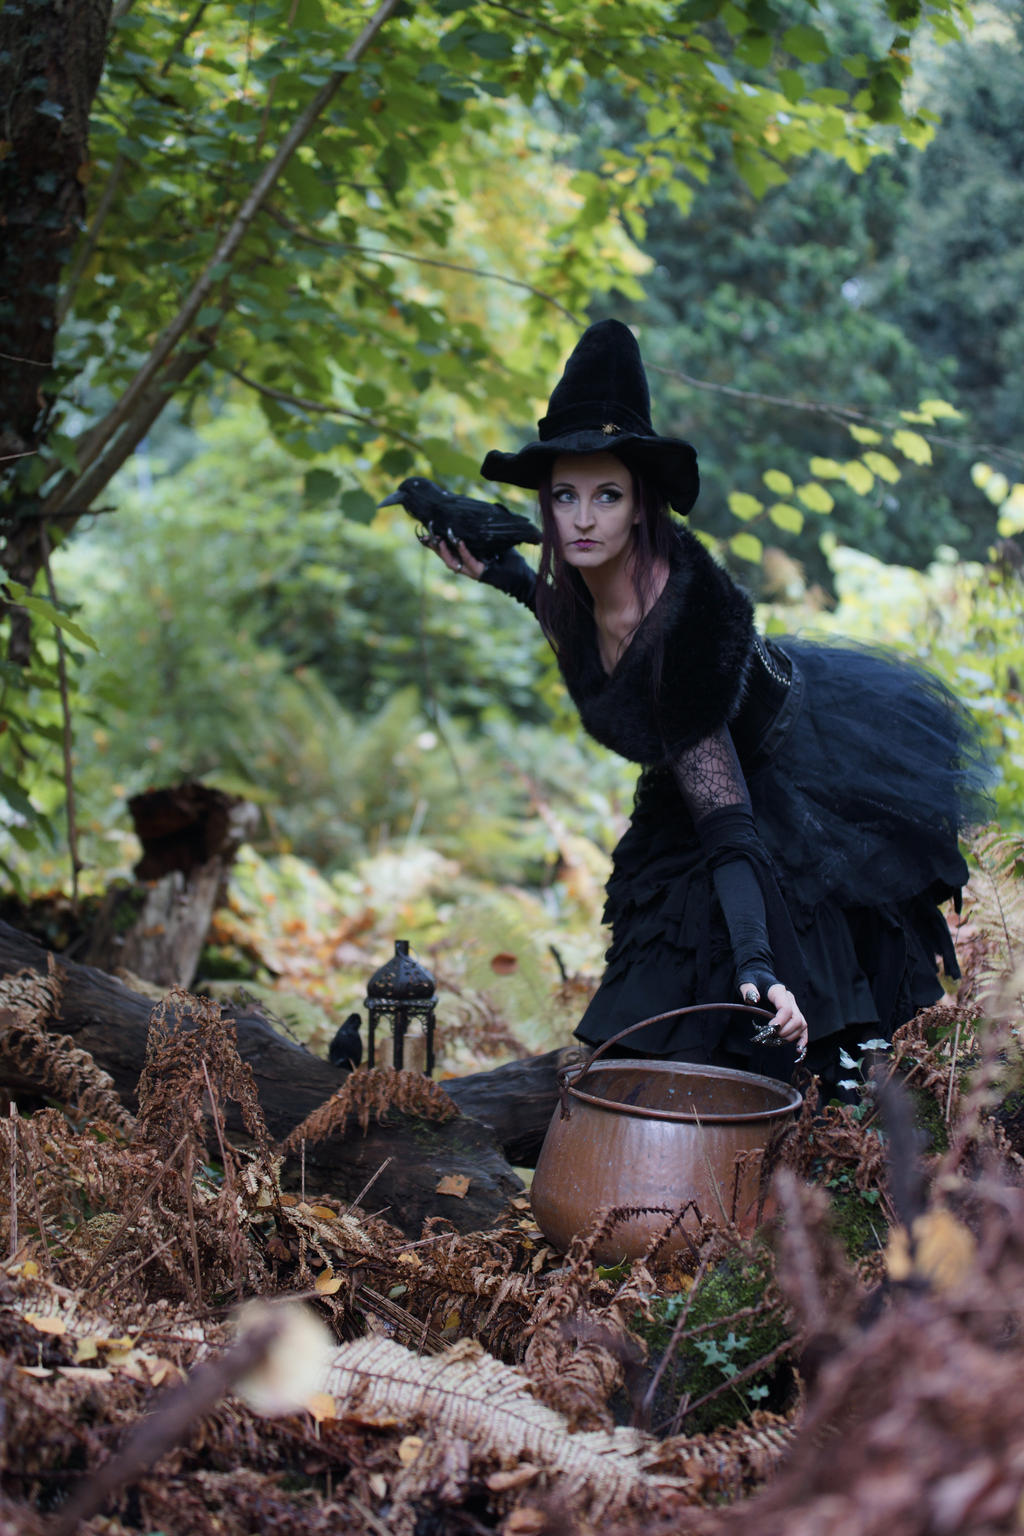 Stock - Halloween special witch  Cauldron scene